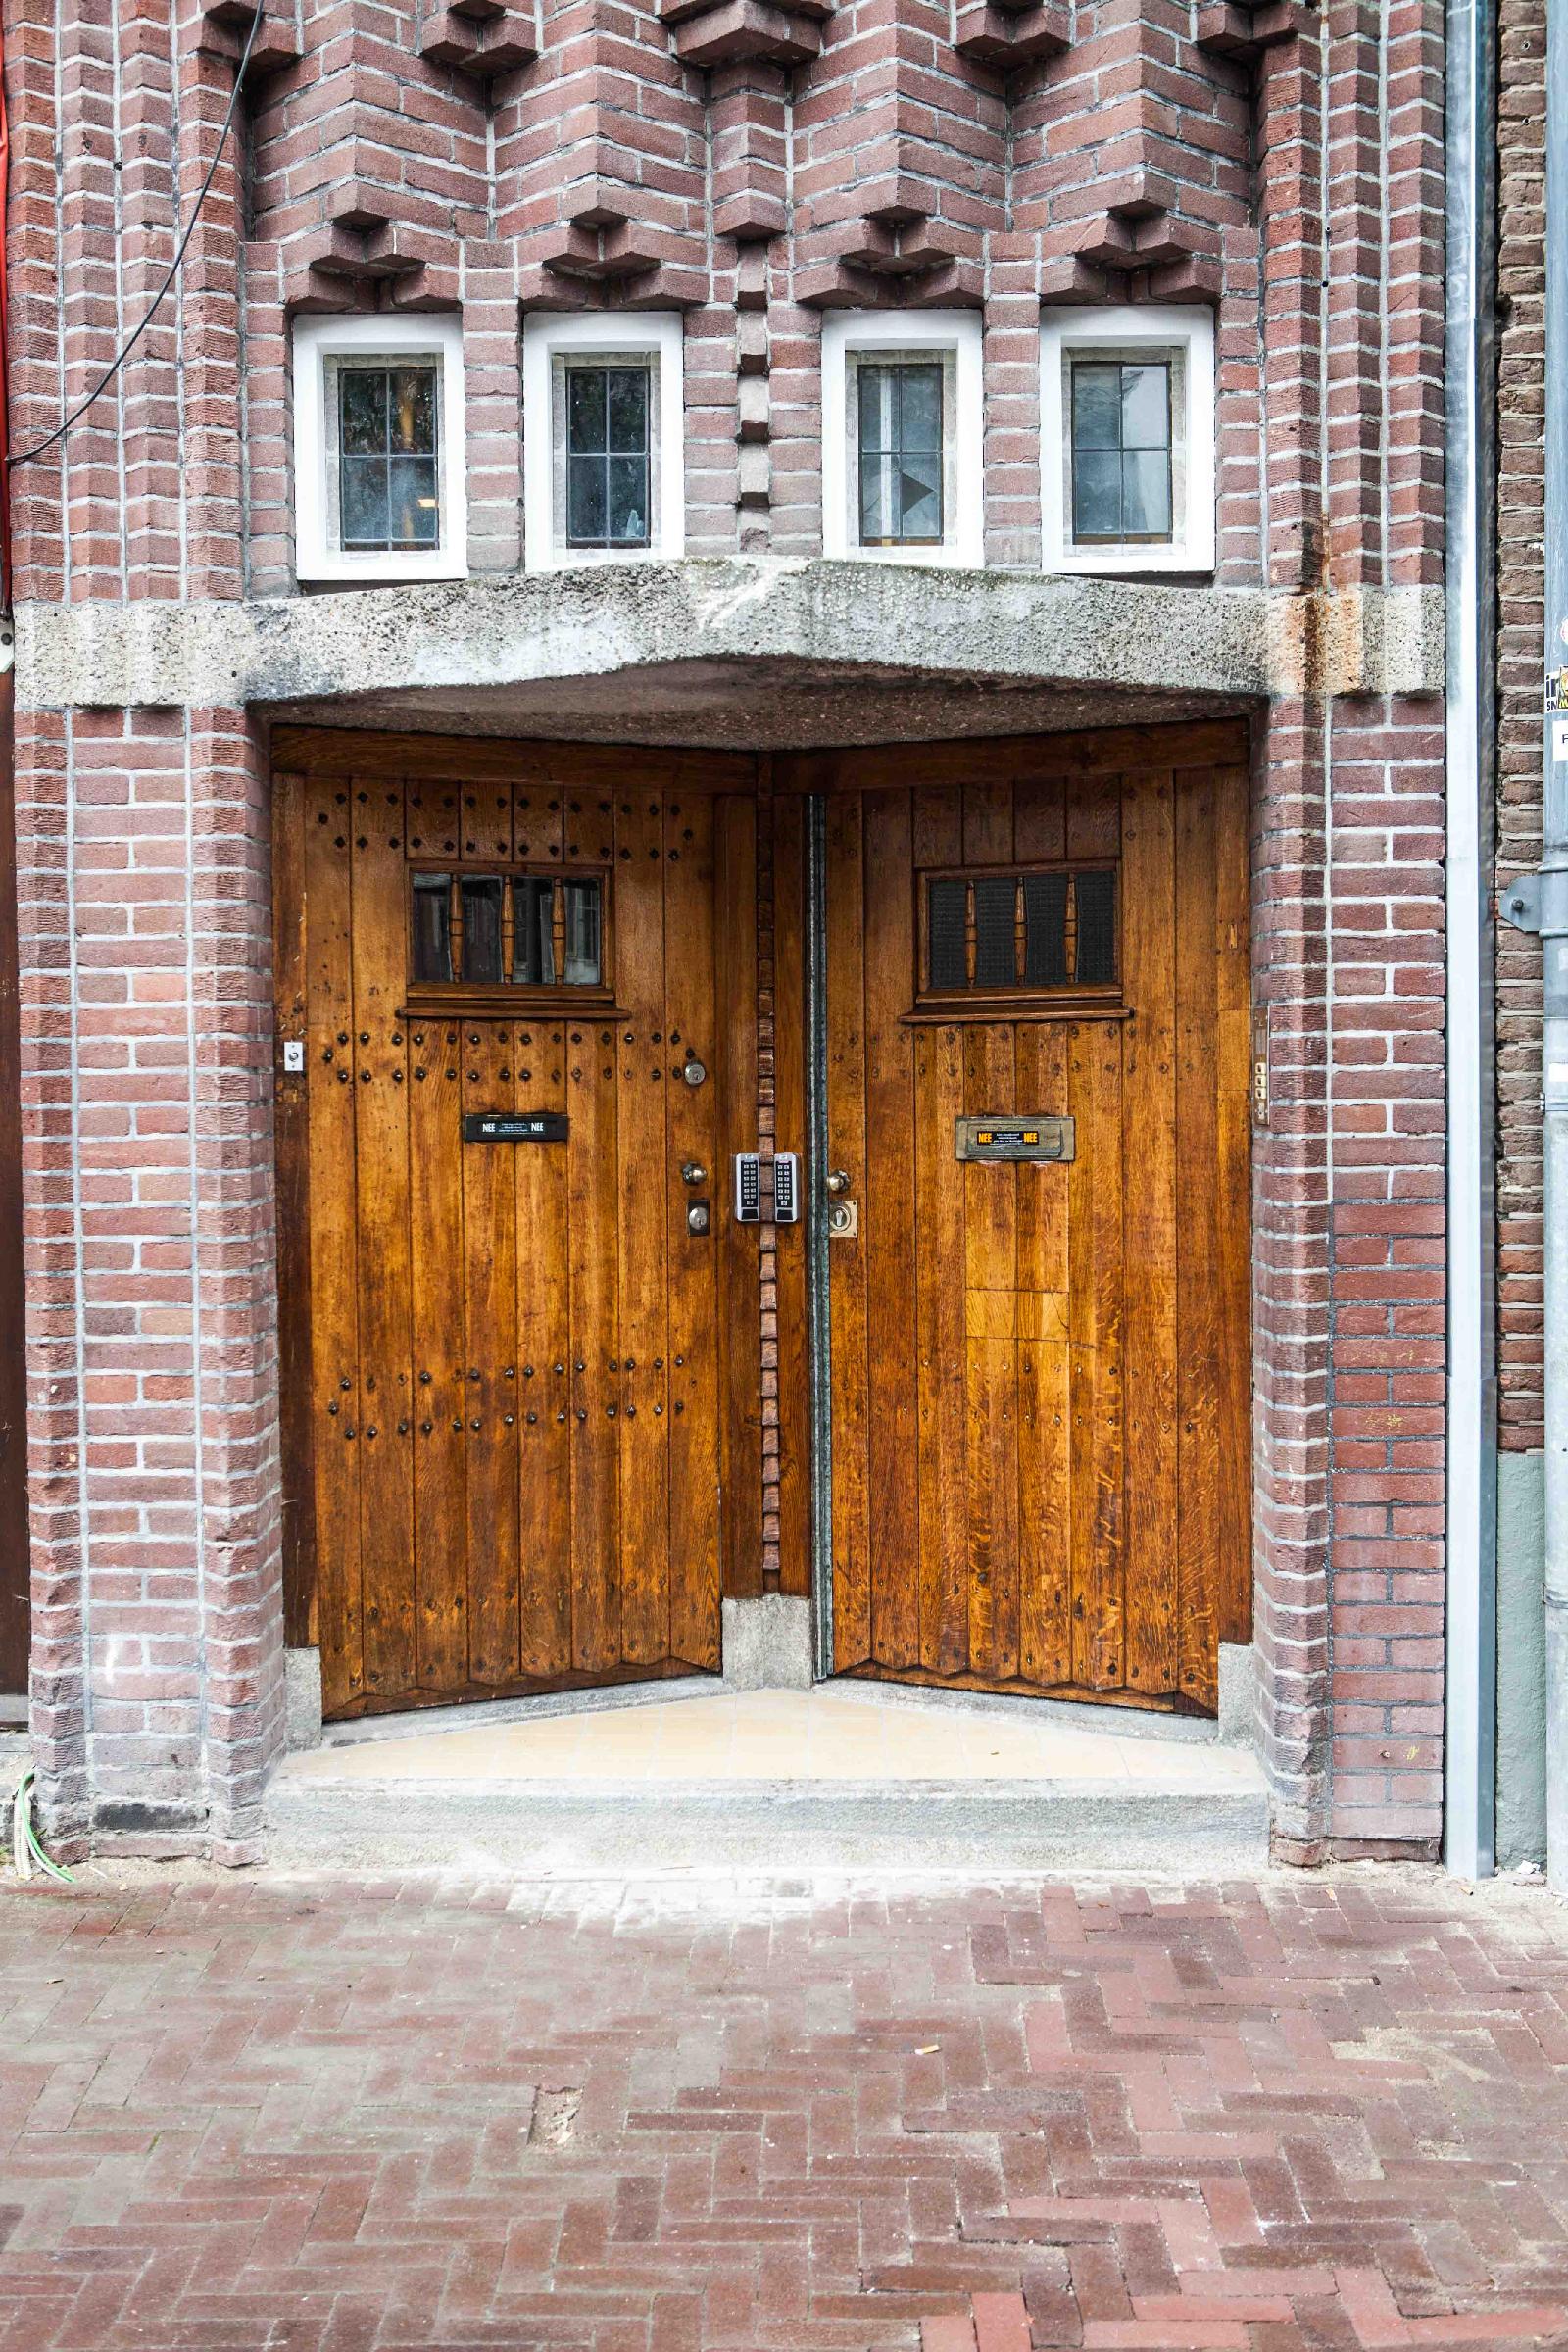 Apartments Prinsengracht